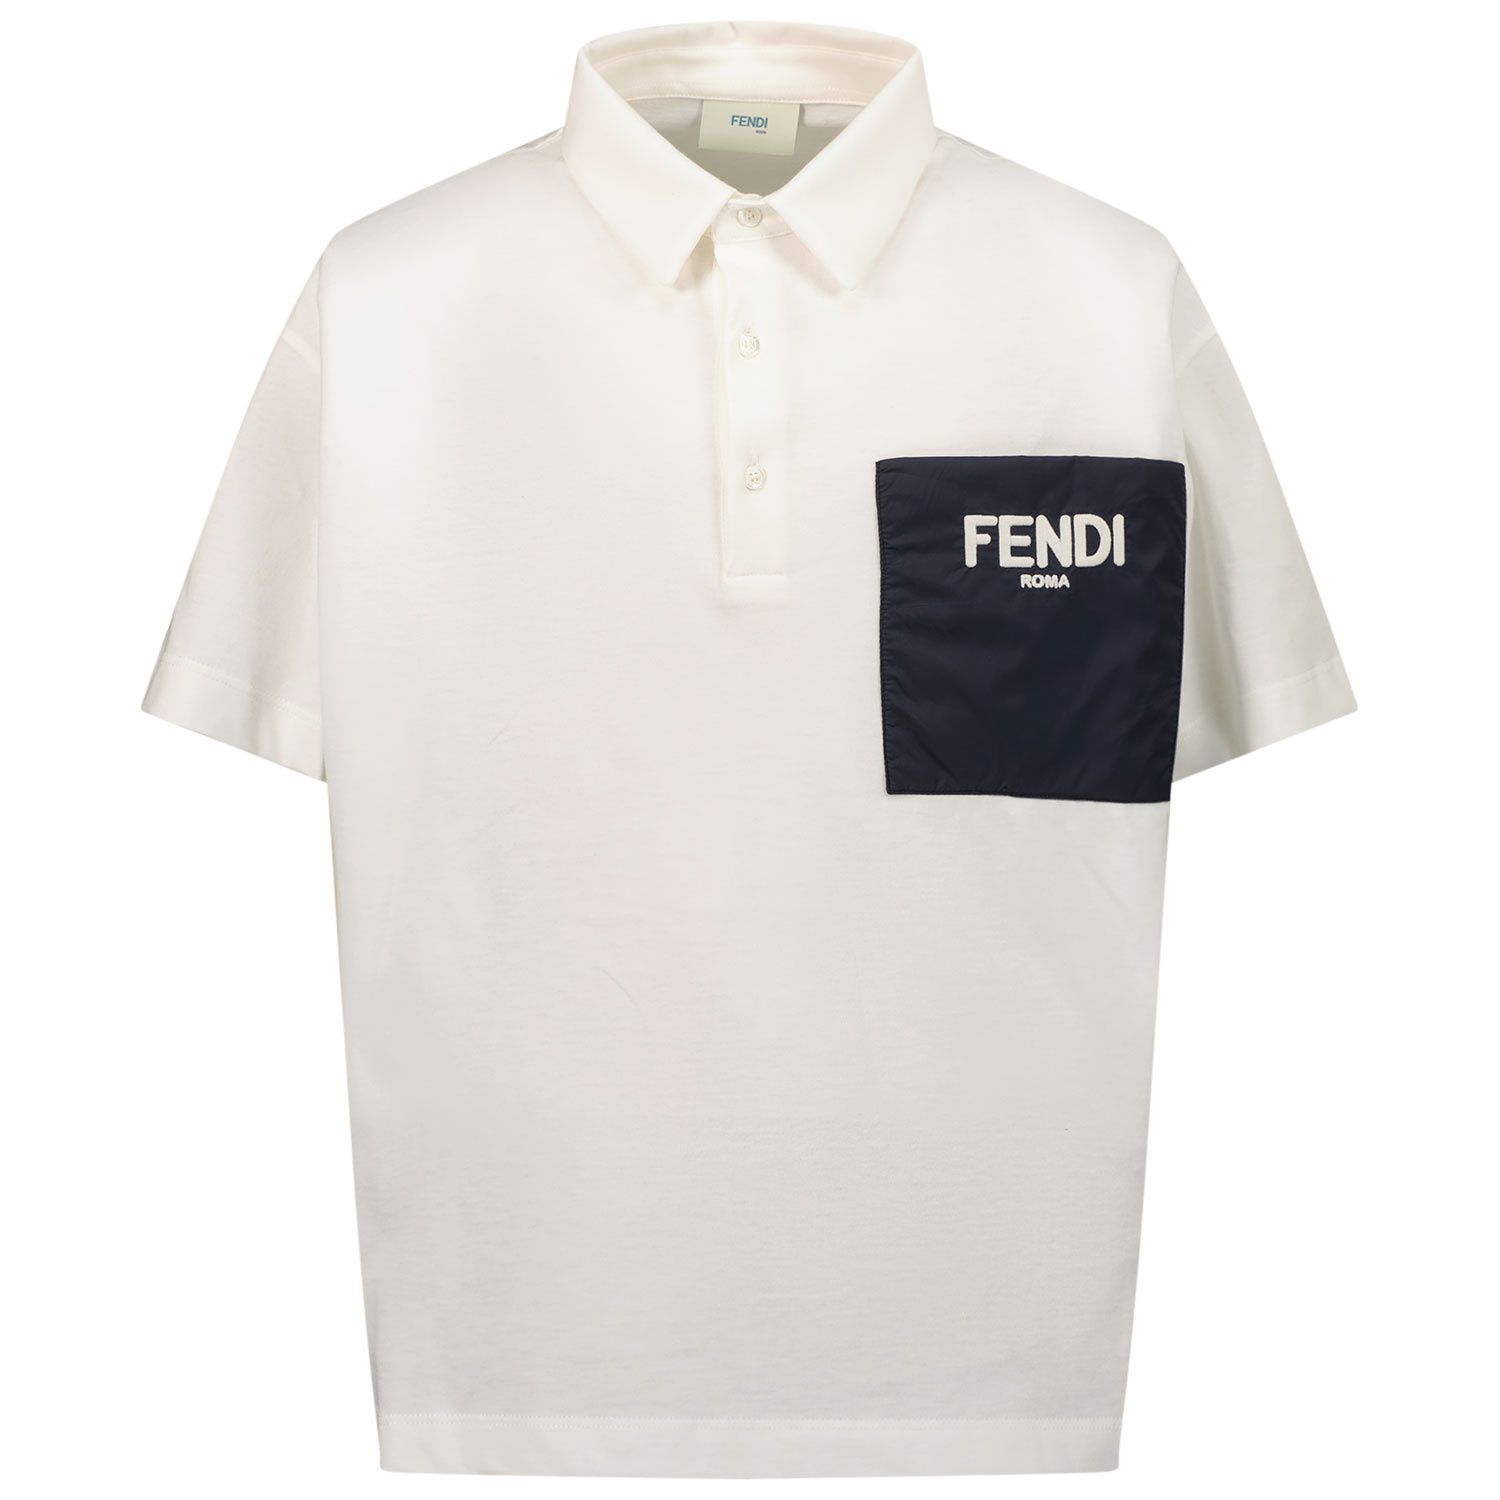 Picture of Fendi JMI361 AEXL kids polo shirt white